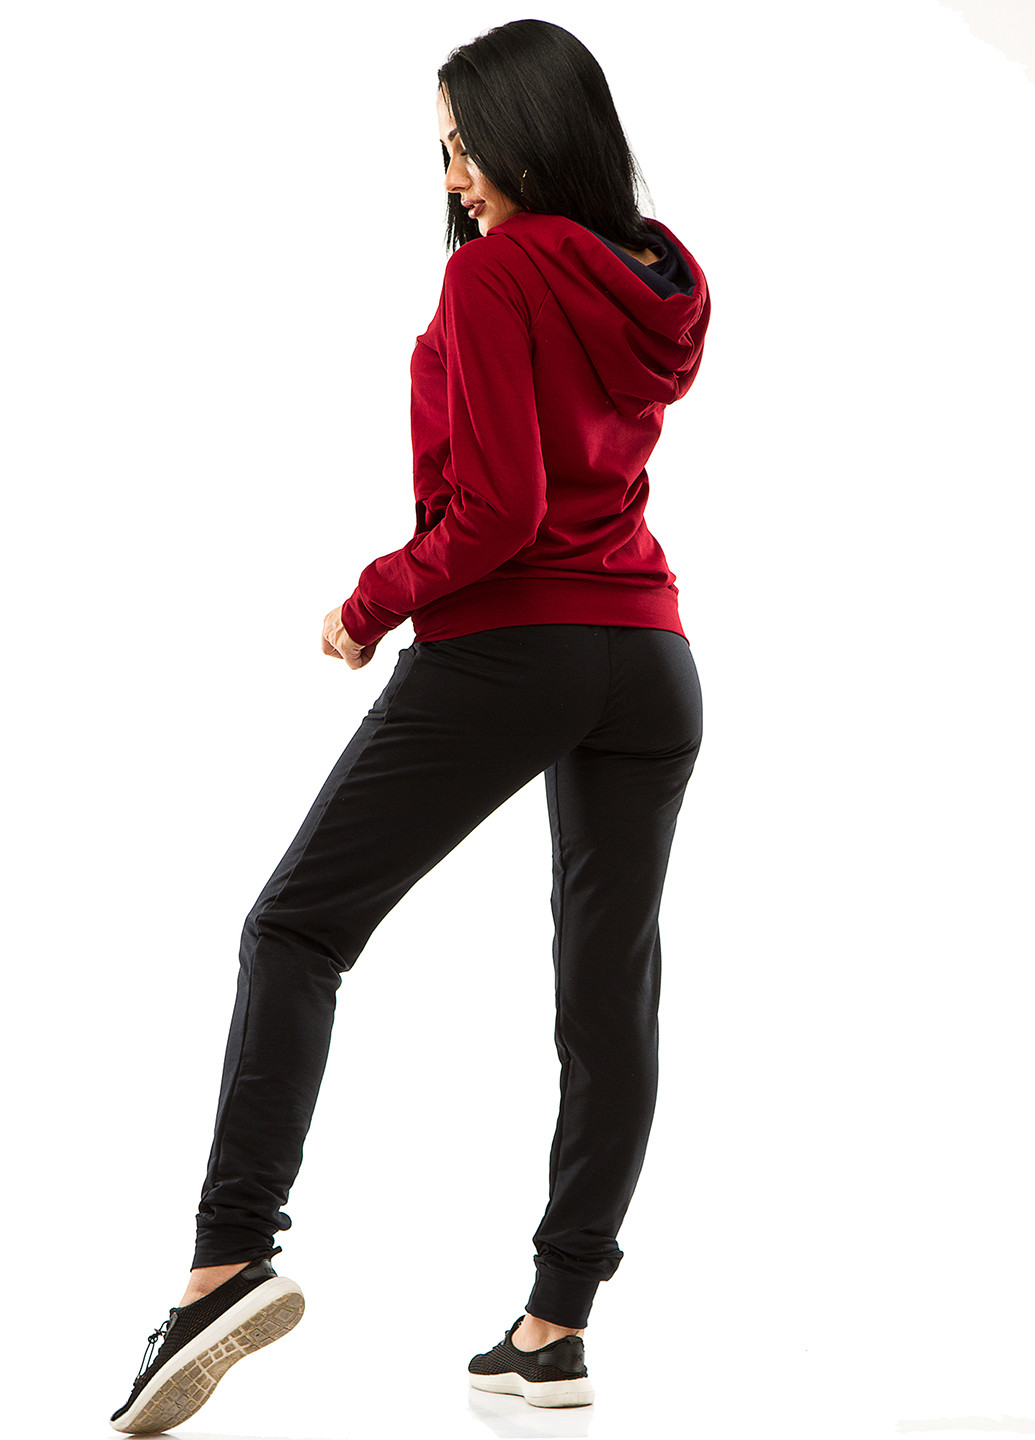 Костюм (толстовка, брюки) Demma брючный логотип бордовый спортивный